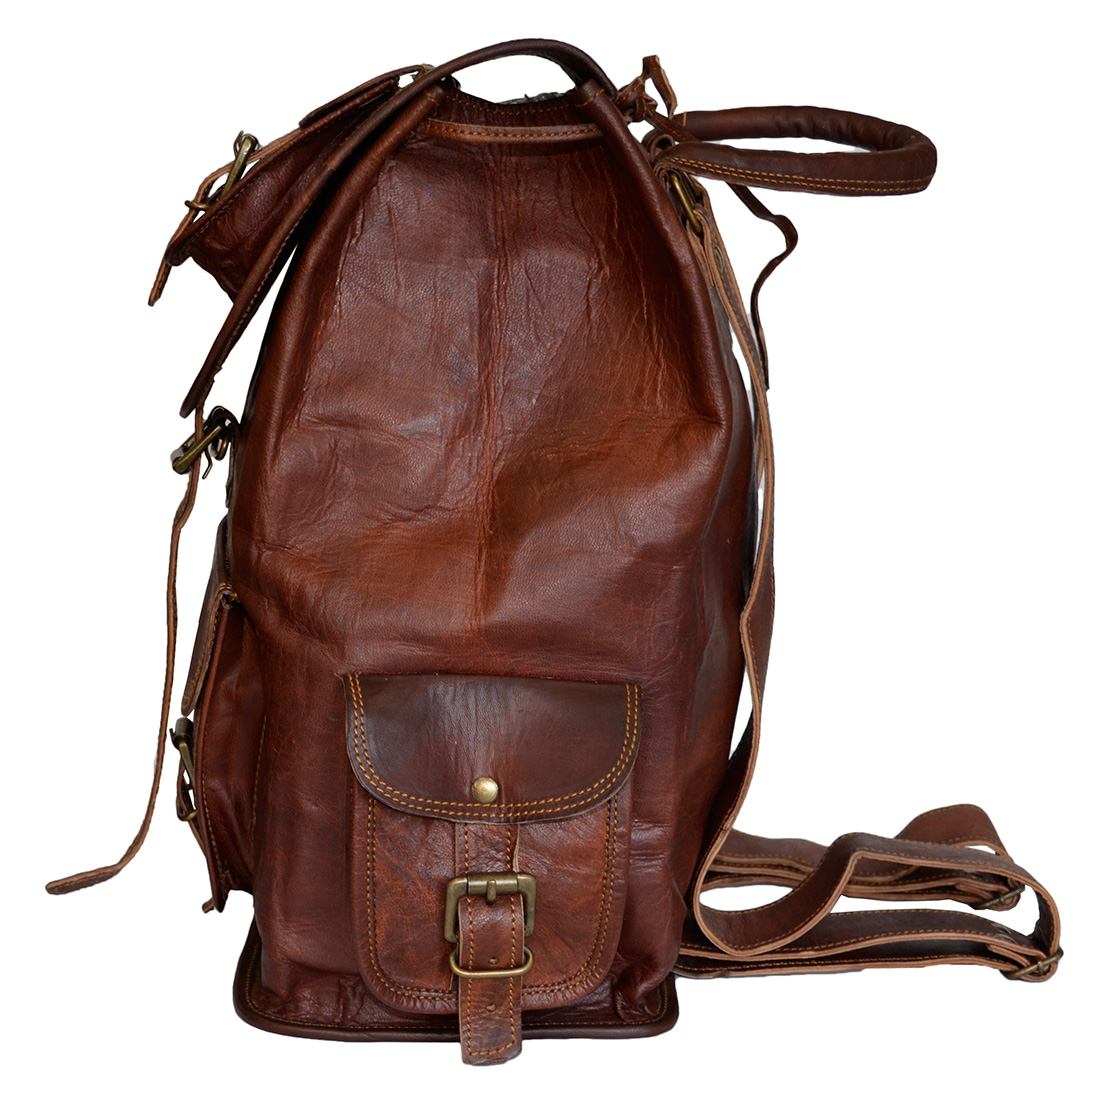 Madosh Genuine Leather Backpacks Hiking Rucksack Brown Camping Daypacks Travel Luggage Bag - image 2 of 6